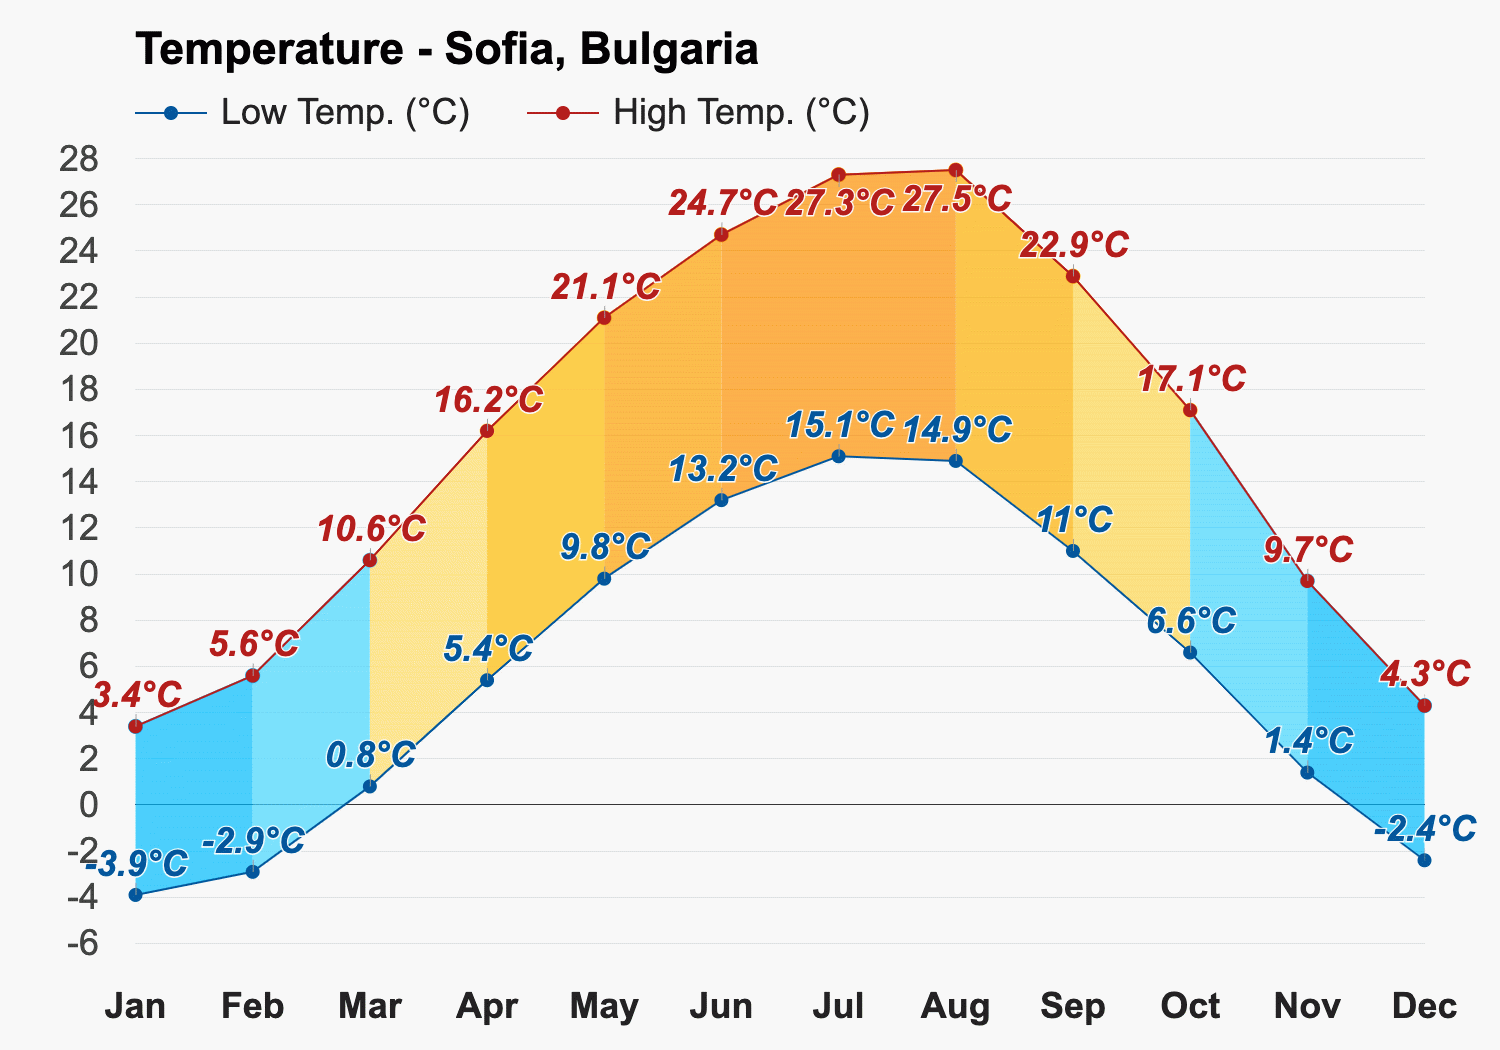 Sofia, Bulgaria - Climate & Monthly weather forecast